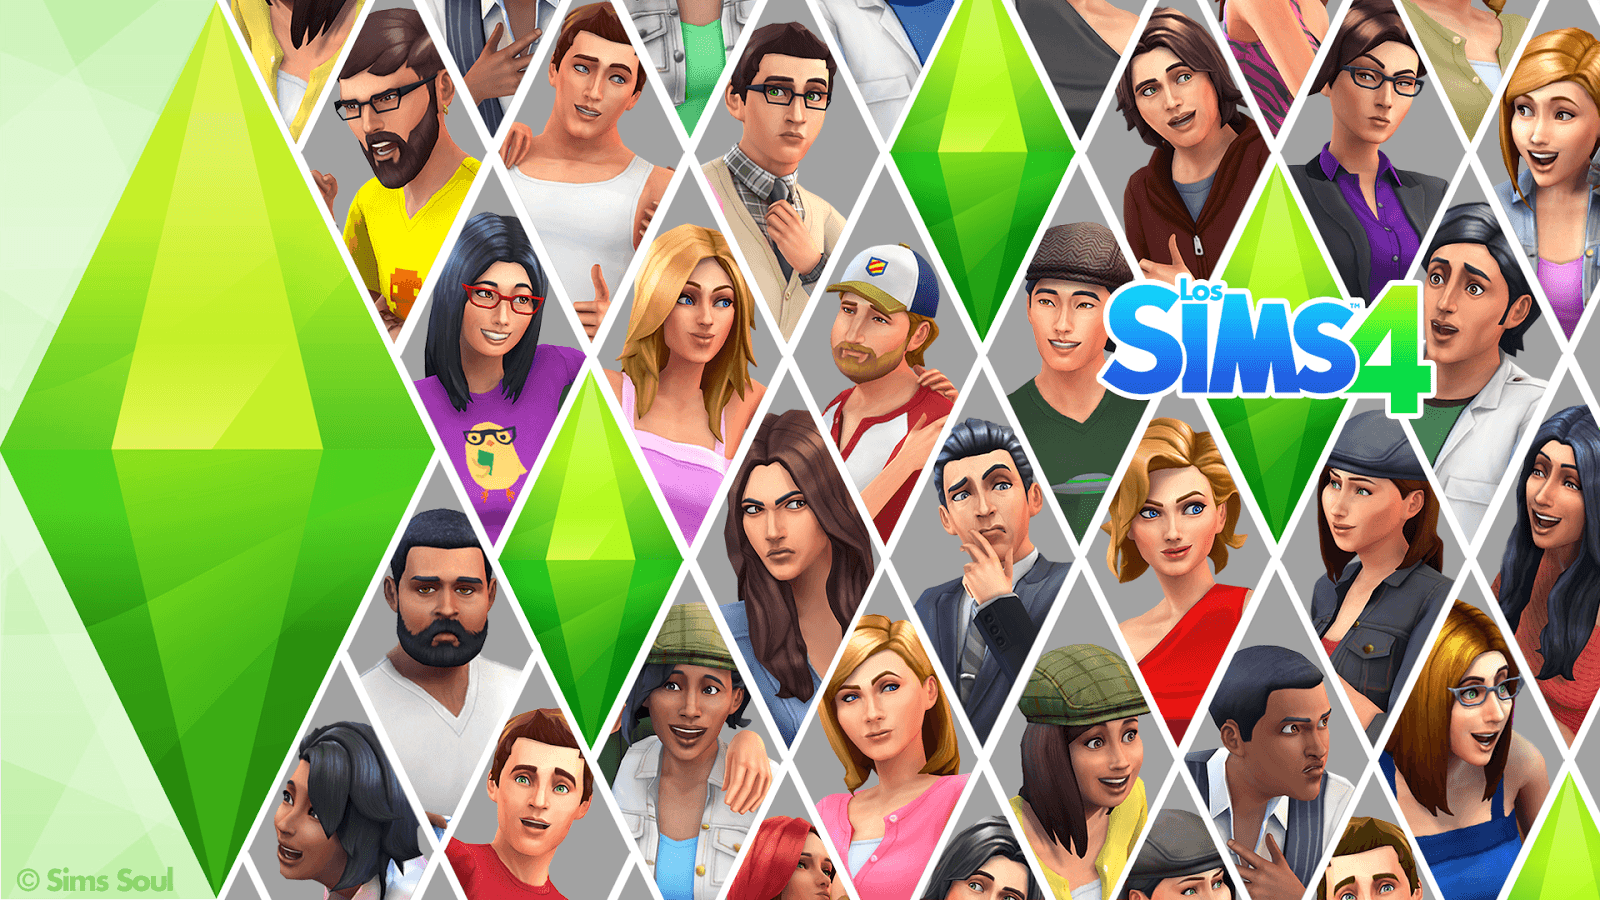 The Sims 4 Wallpaper CC